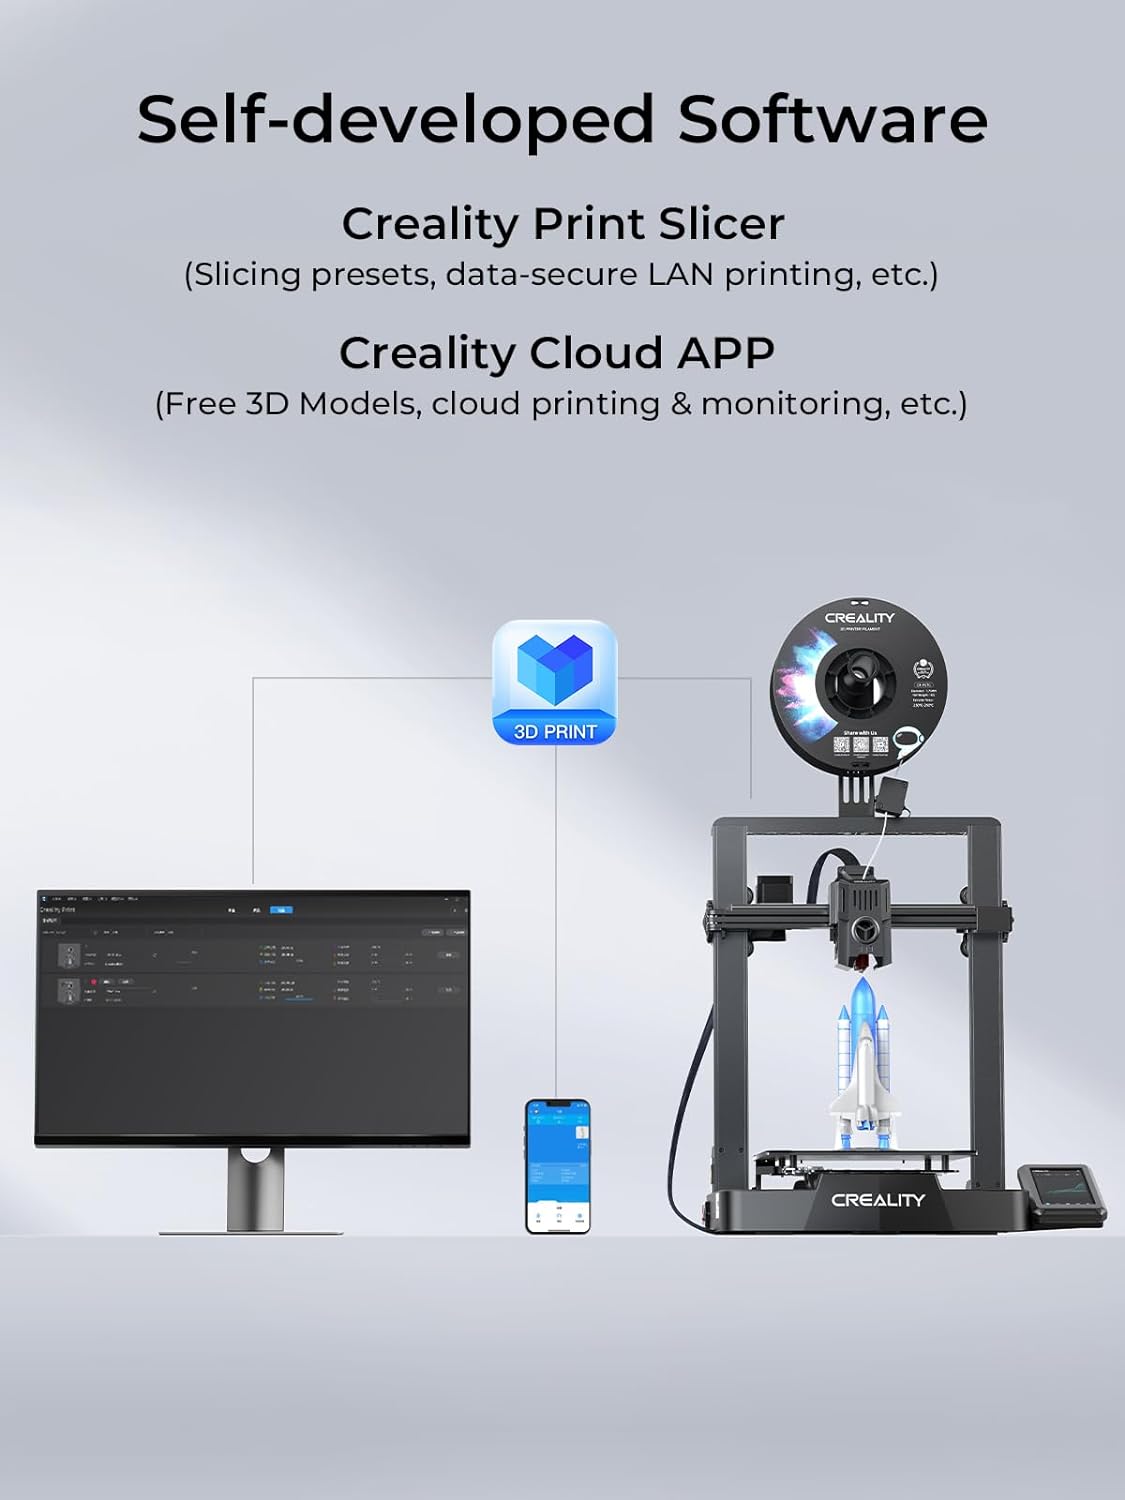 Creality Impresora 3D Ender-3 V3 KE, 500mm/s Velocidad de Impresión Impresora 3D, CR Touch Auto Nivelación, Sprite Extrusor Directo Acero Rígido Eje X Lineal, Impresión de 300 ℃, 220x220x240mm